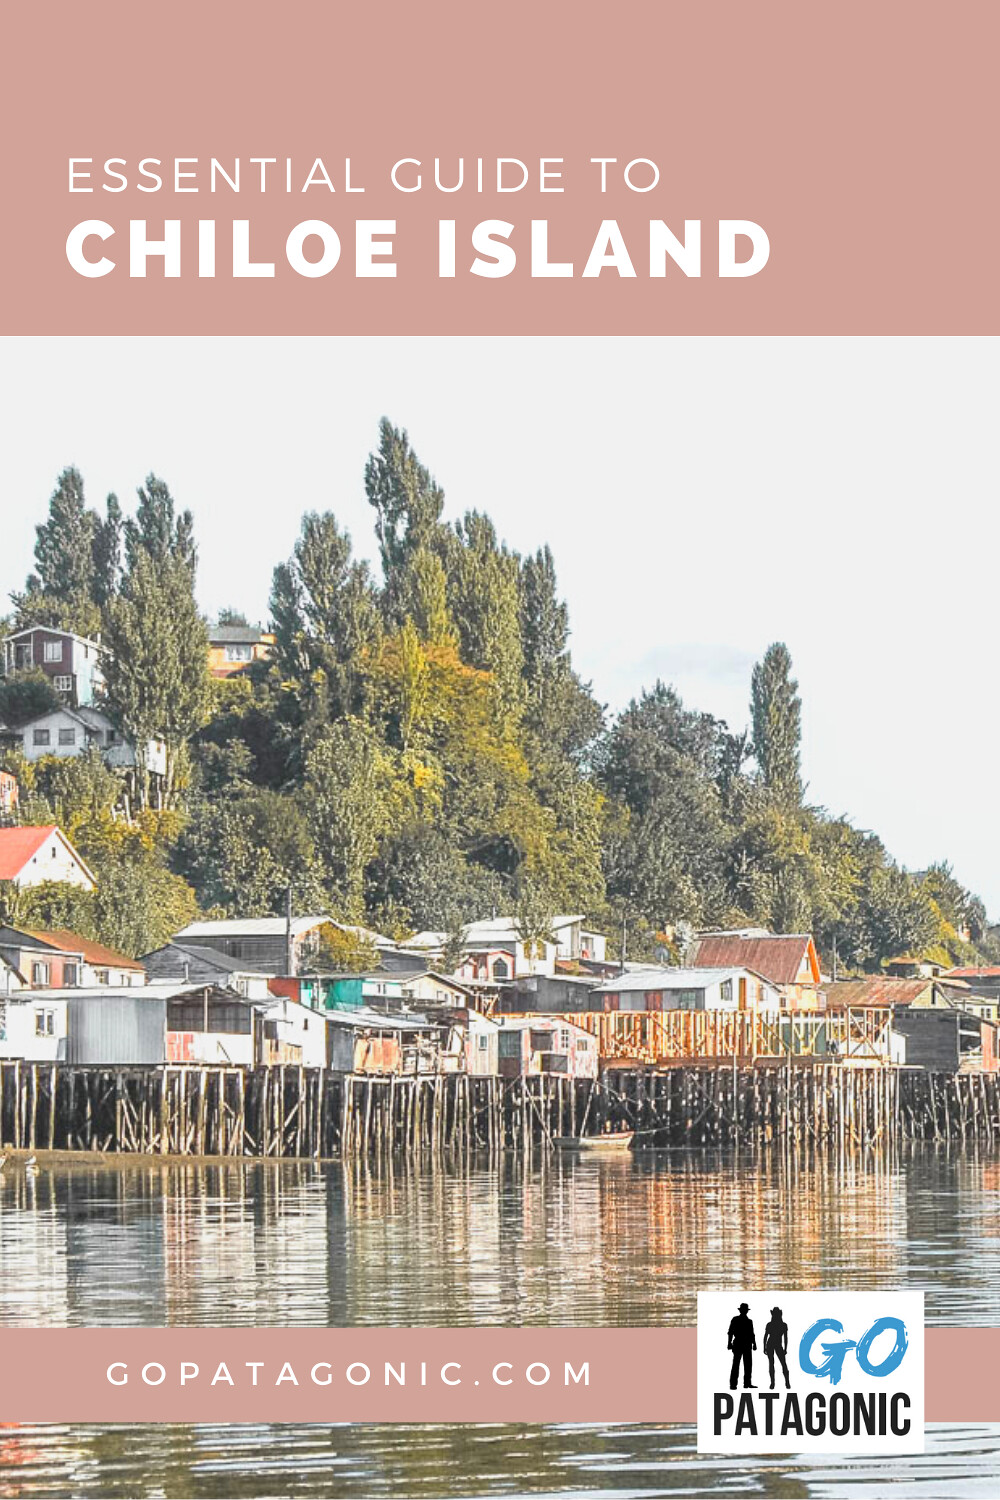 Travel to Chiloe Island